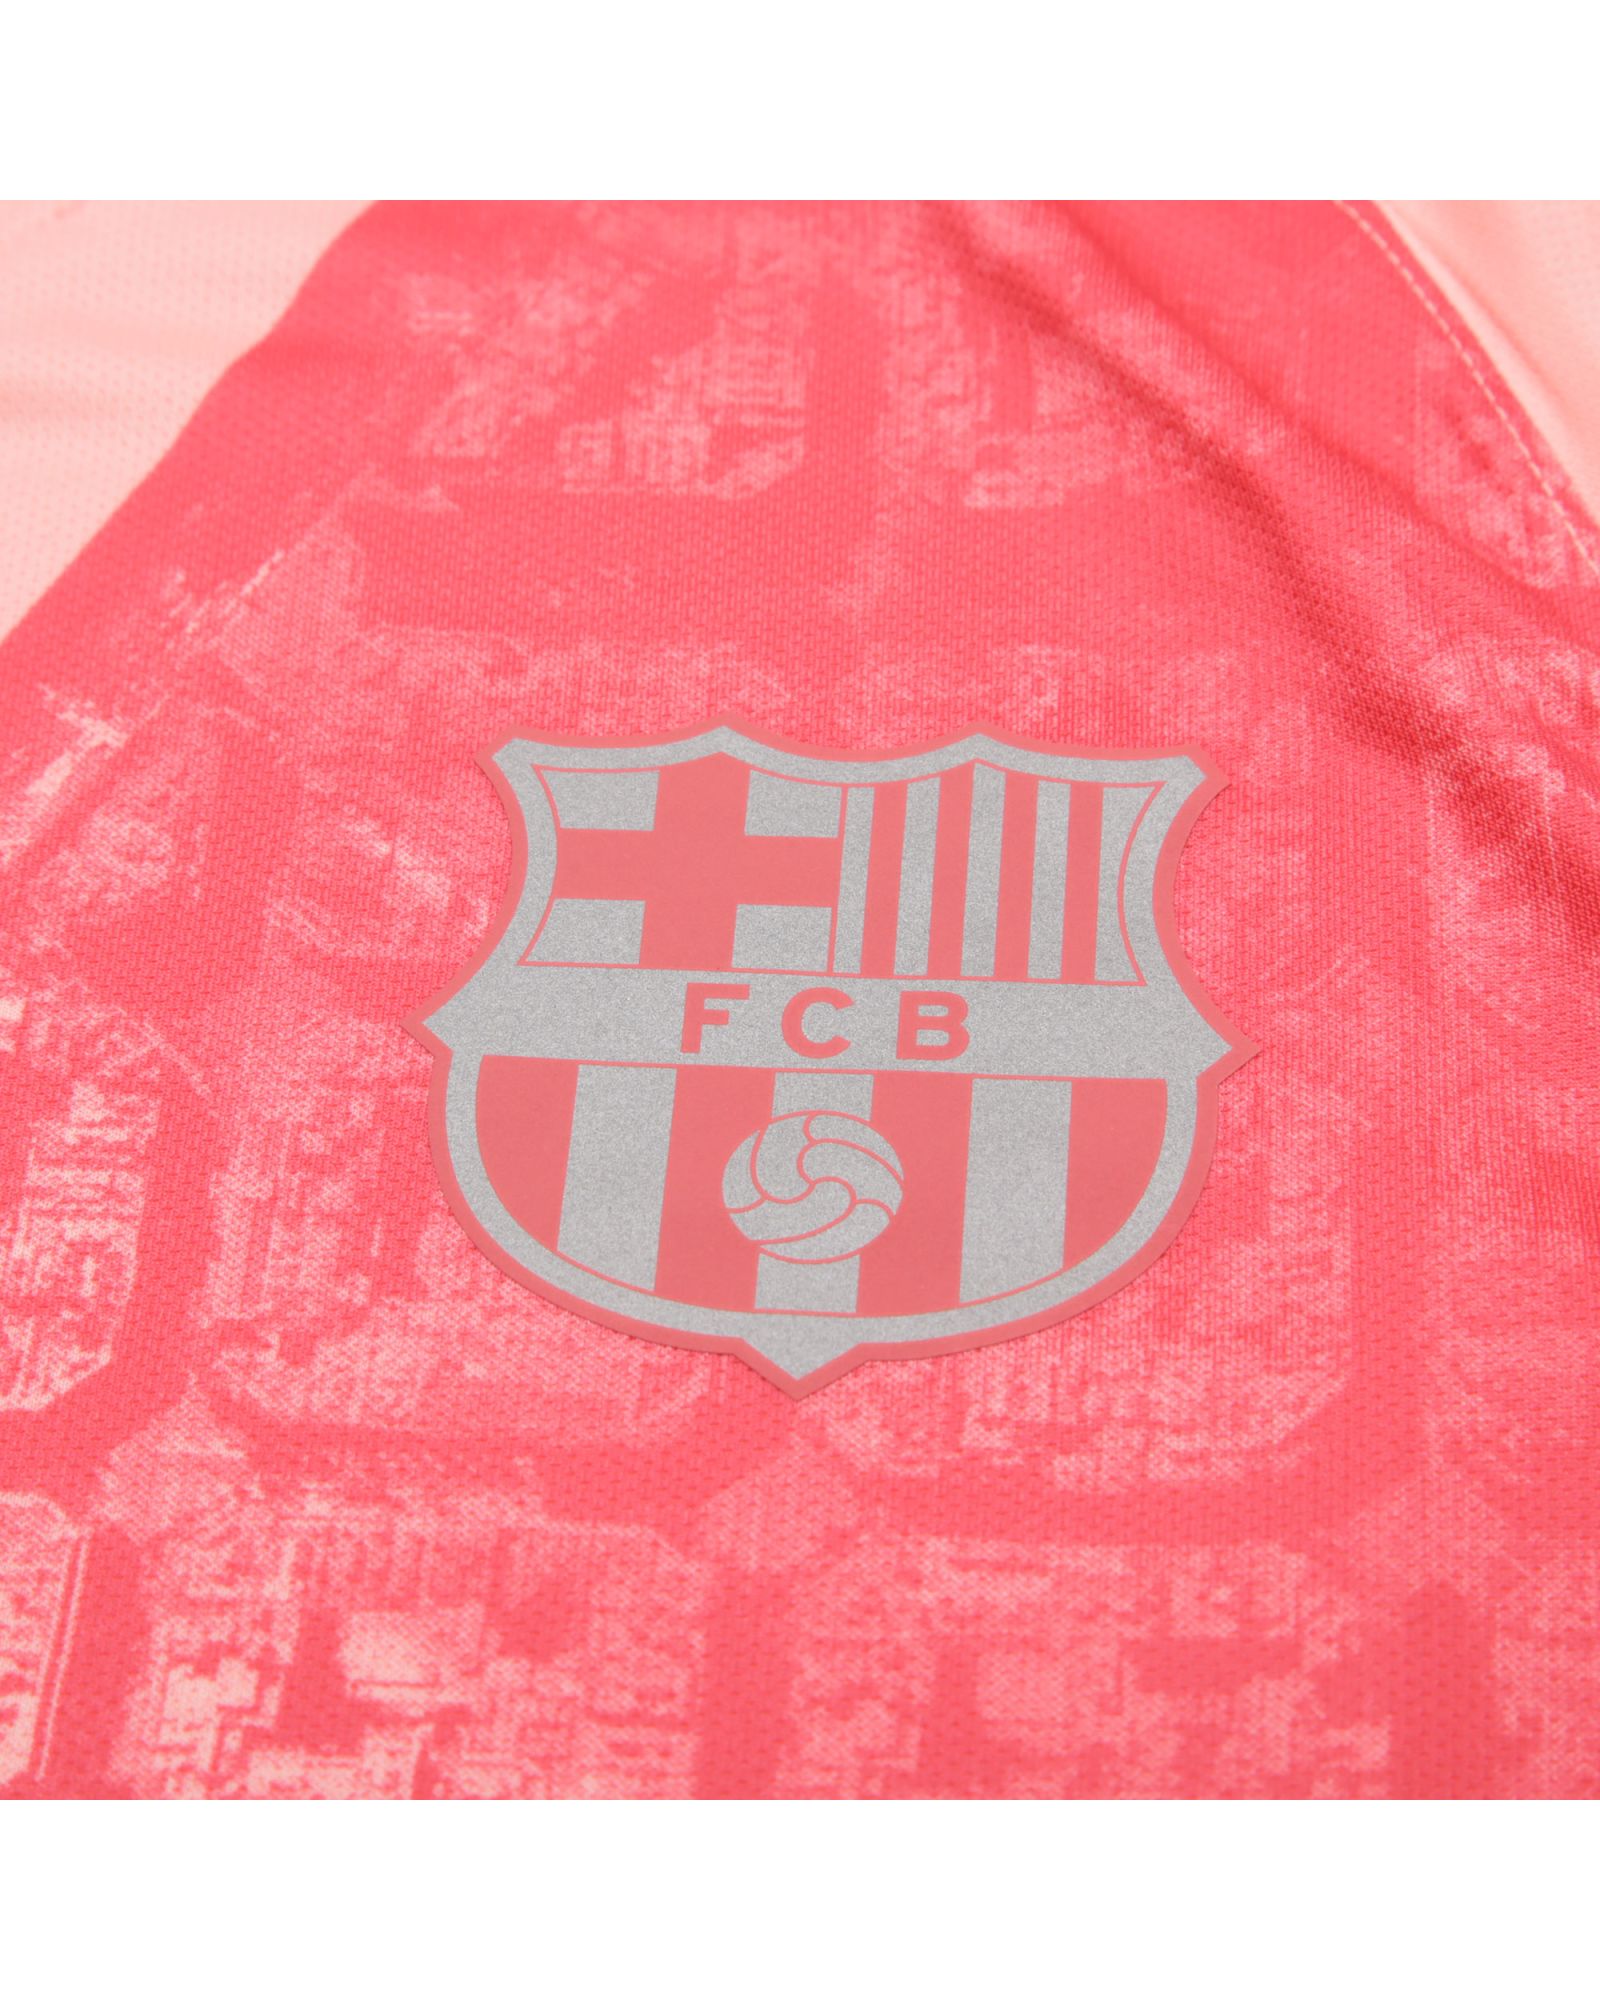 Camiseta 3ª FC Barcelona 2018/2019 Stadium Junior Rosa - Fútbol Factory